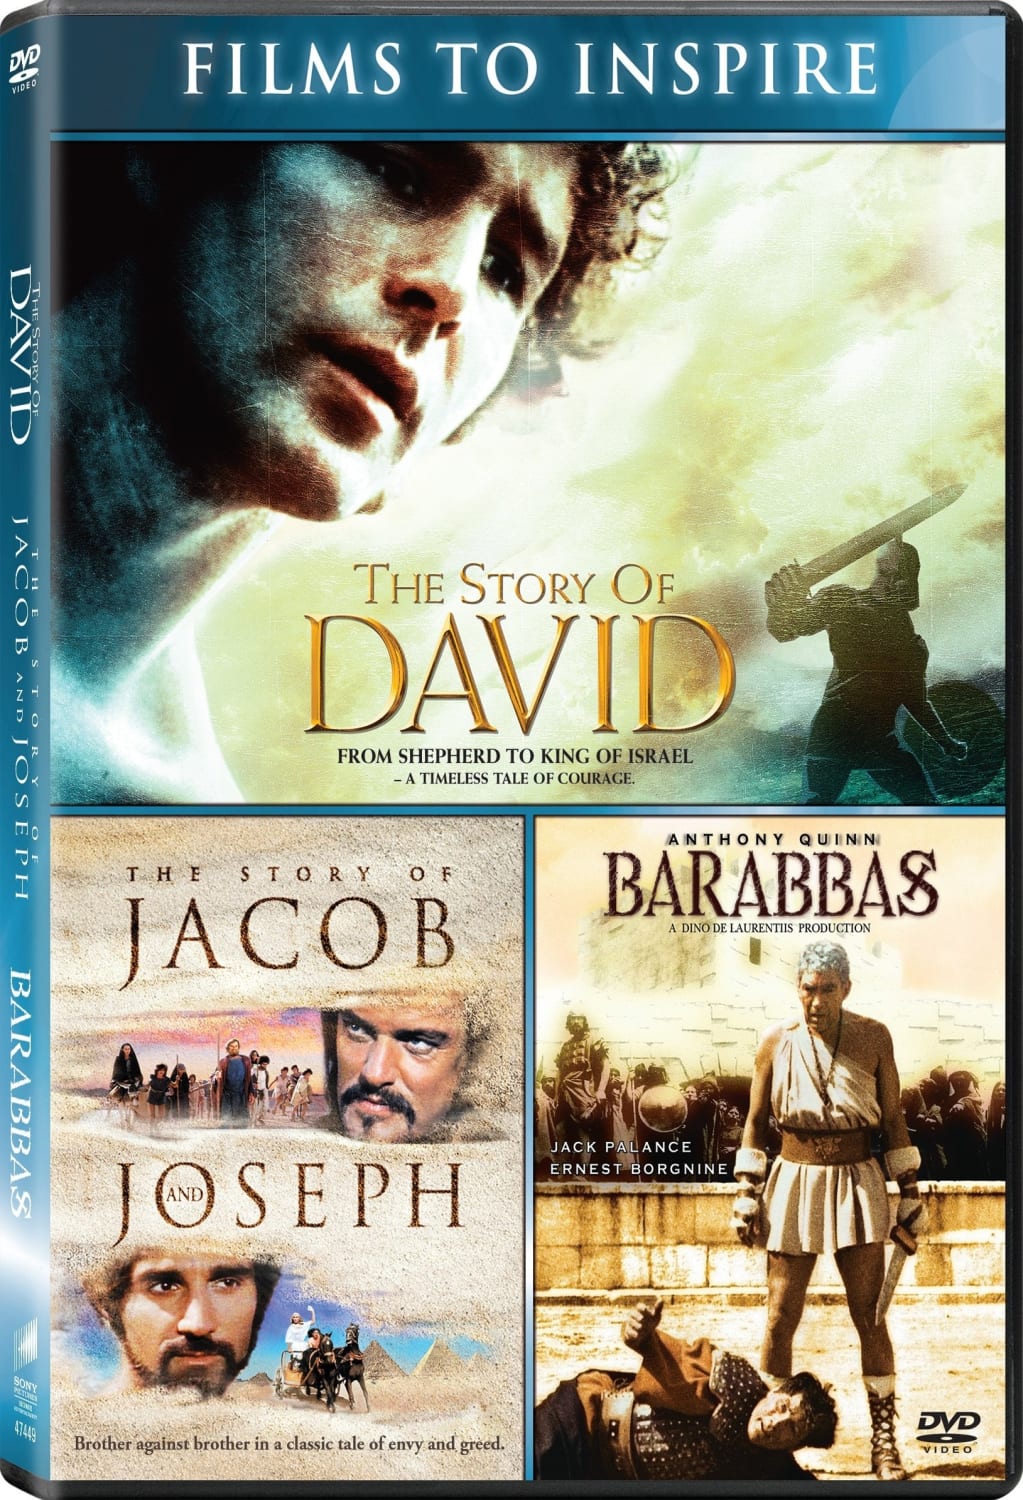 Barabbas / The Story of David / The Story of Jacob and Joseph (DVD) on MovieShack